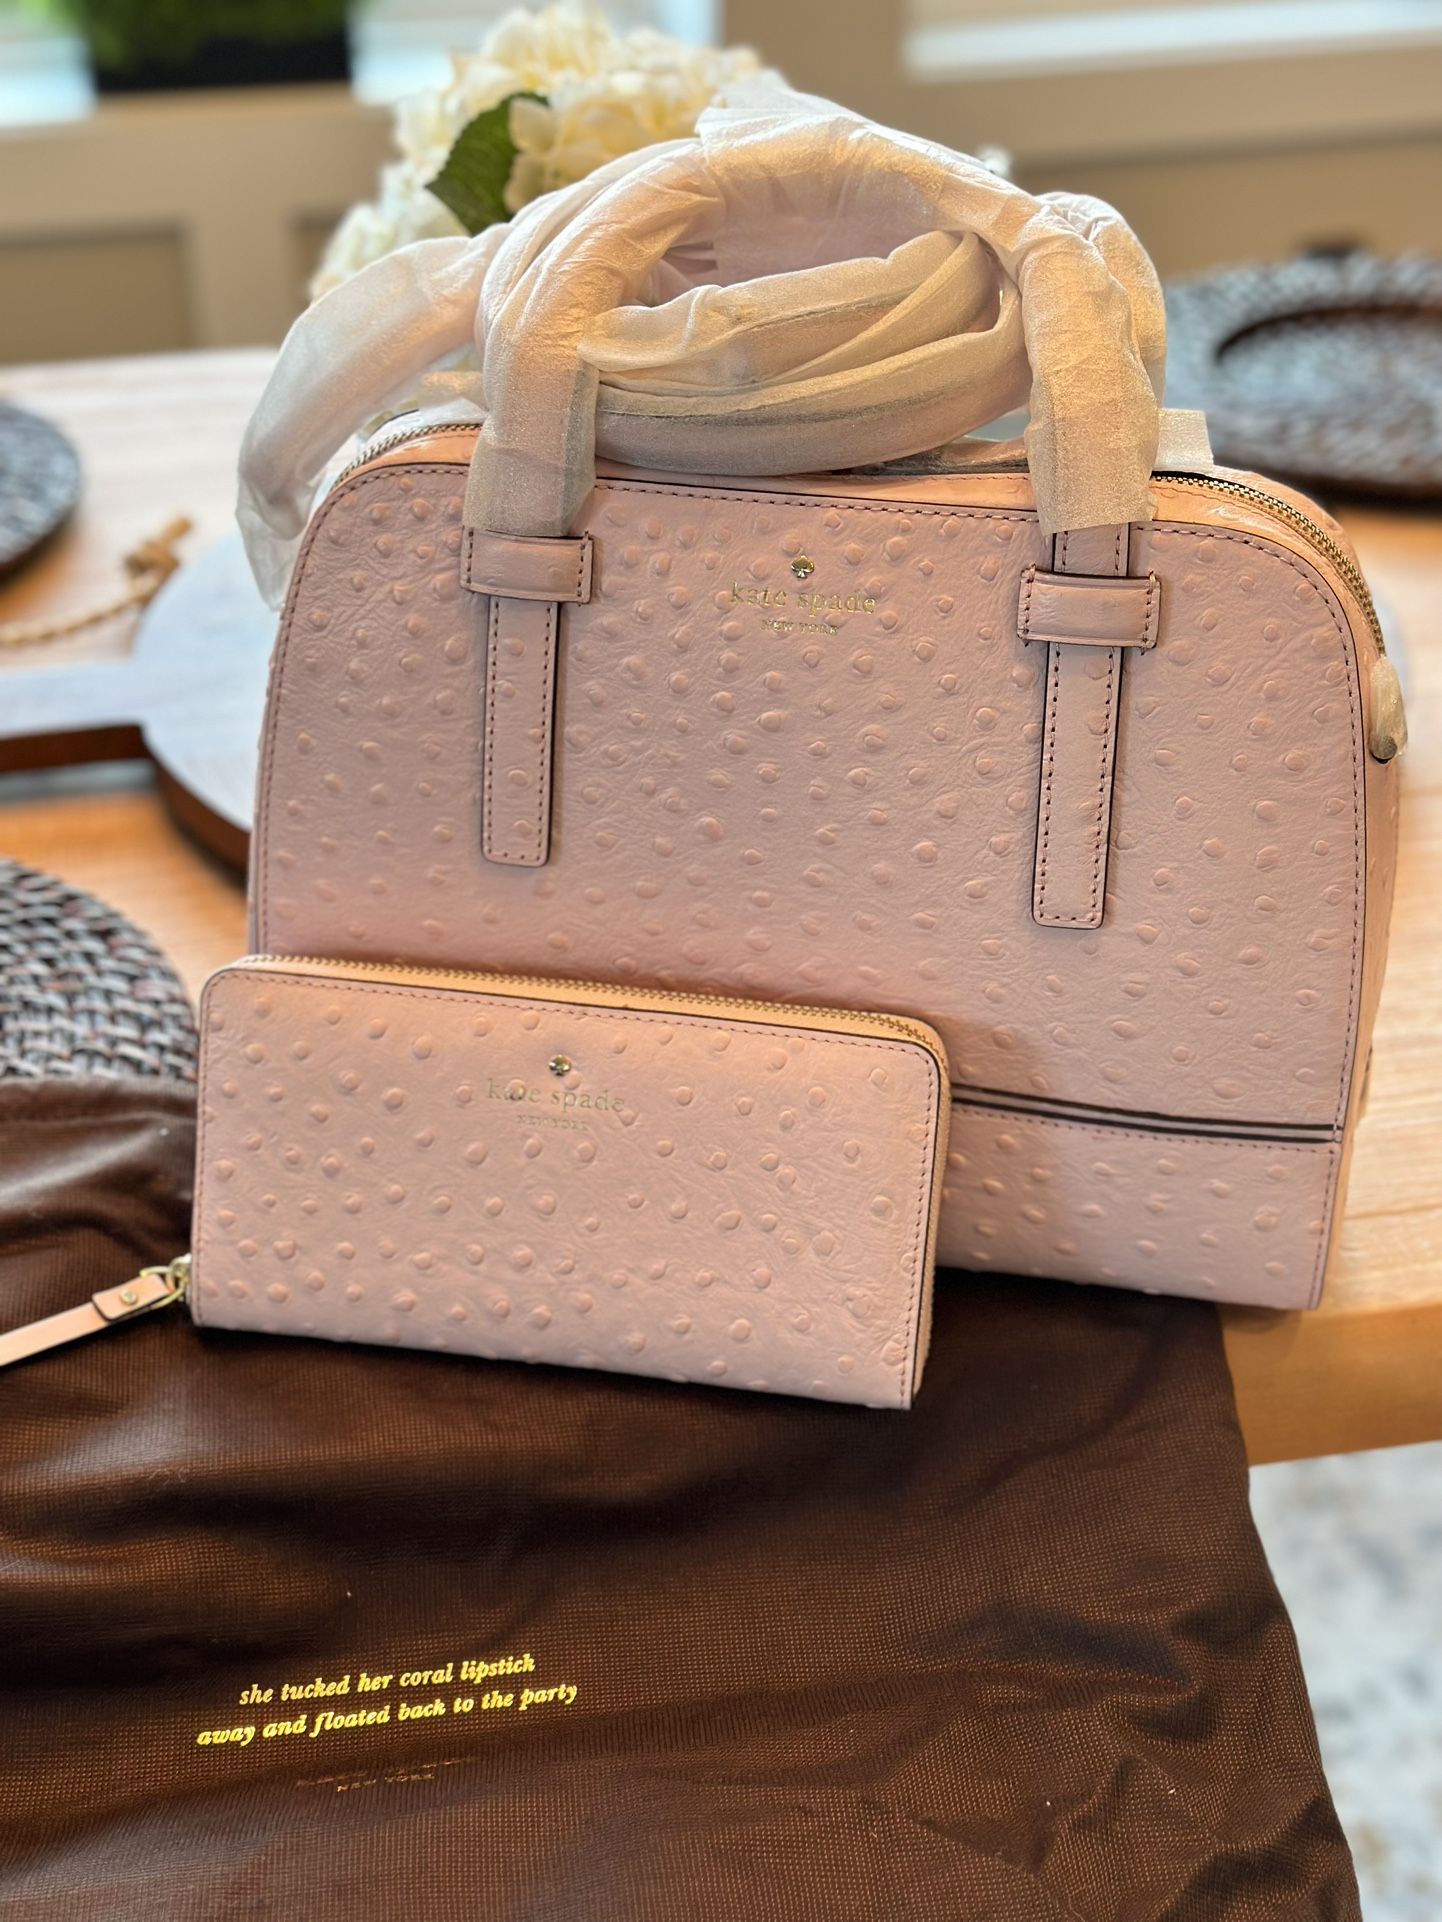 New Pink Kate Spade Bag and Wallet 